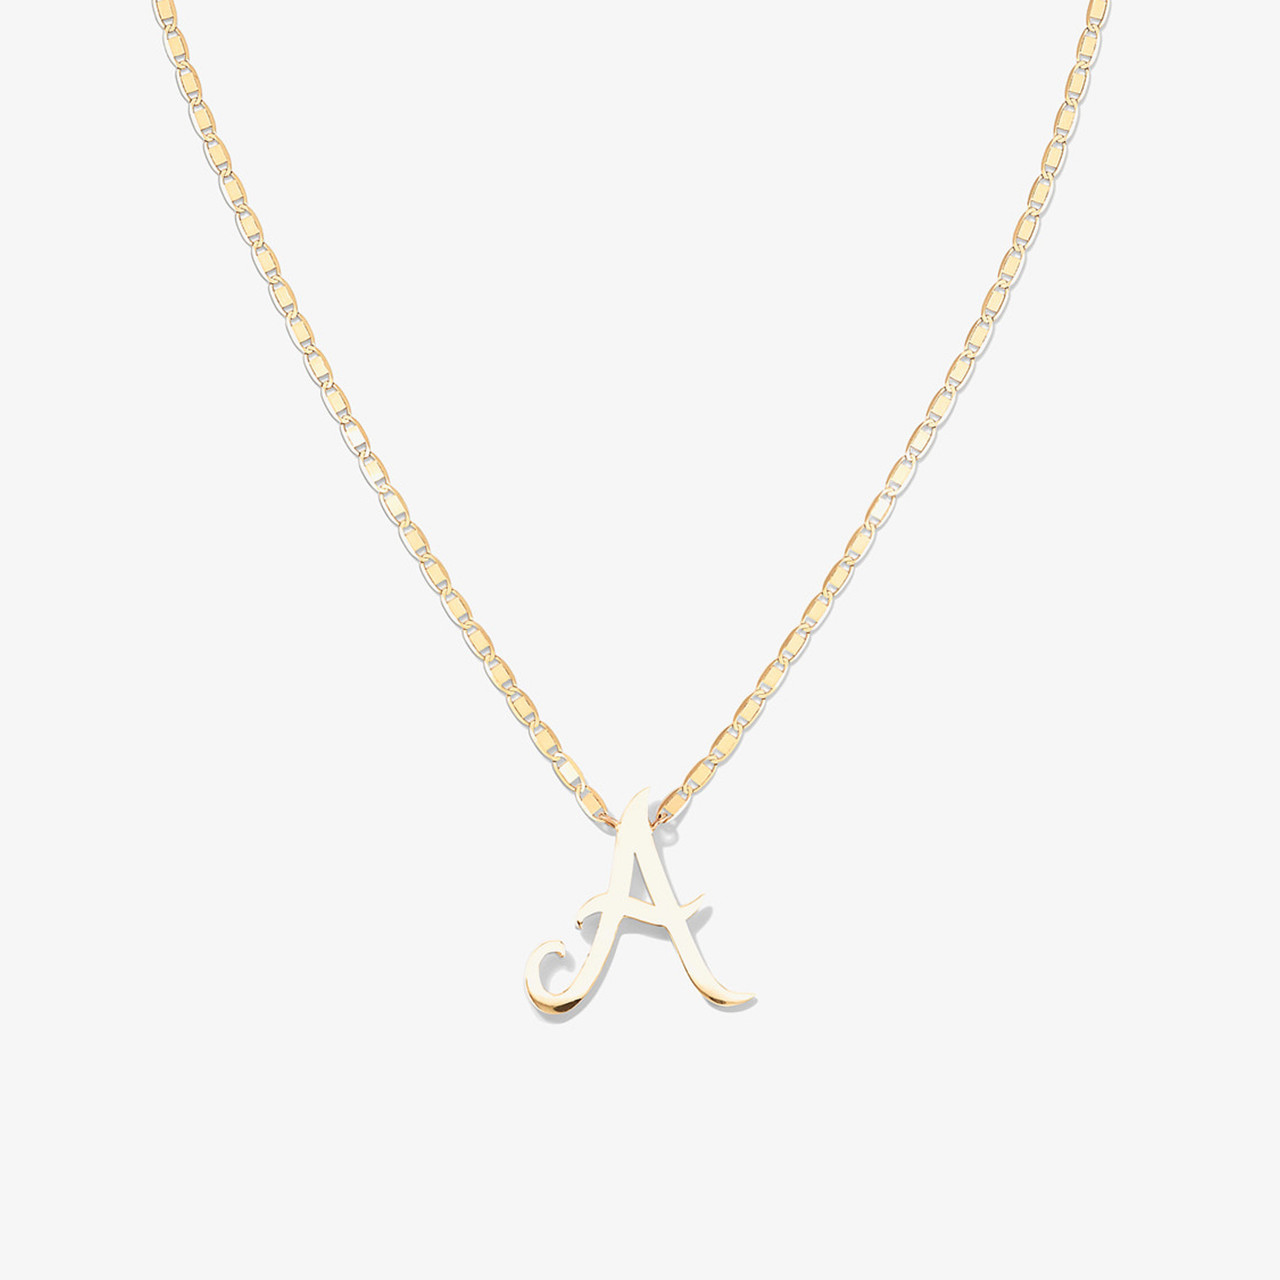 Malibu Nameplate Necklace